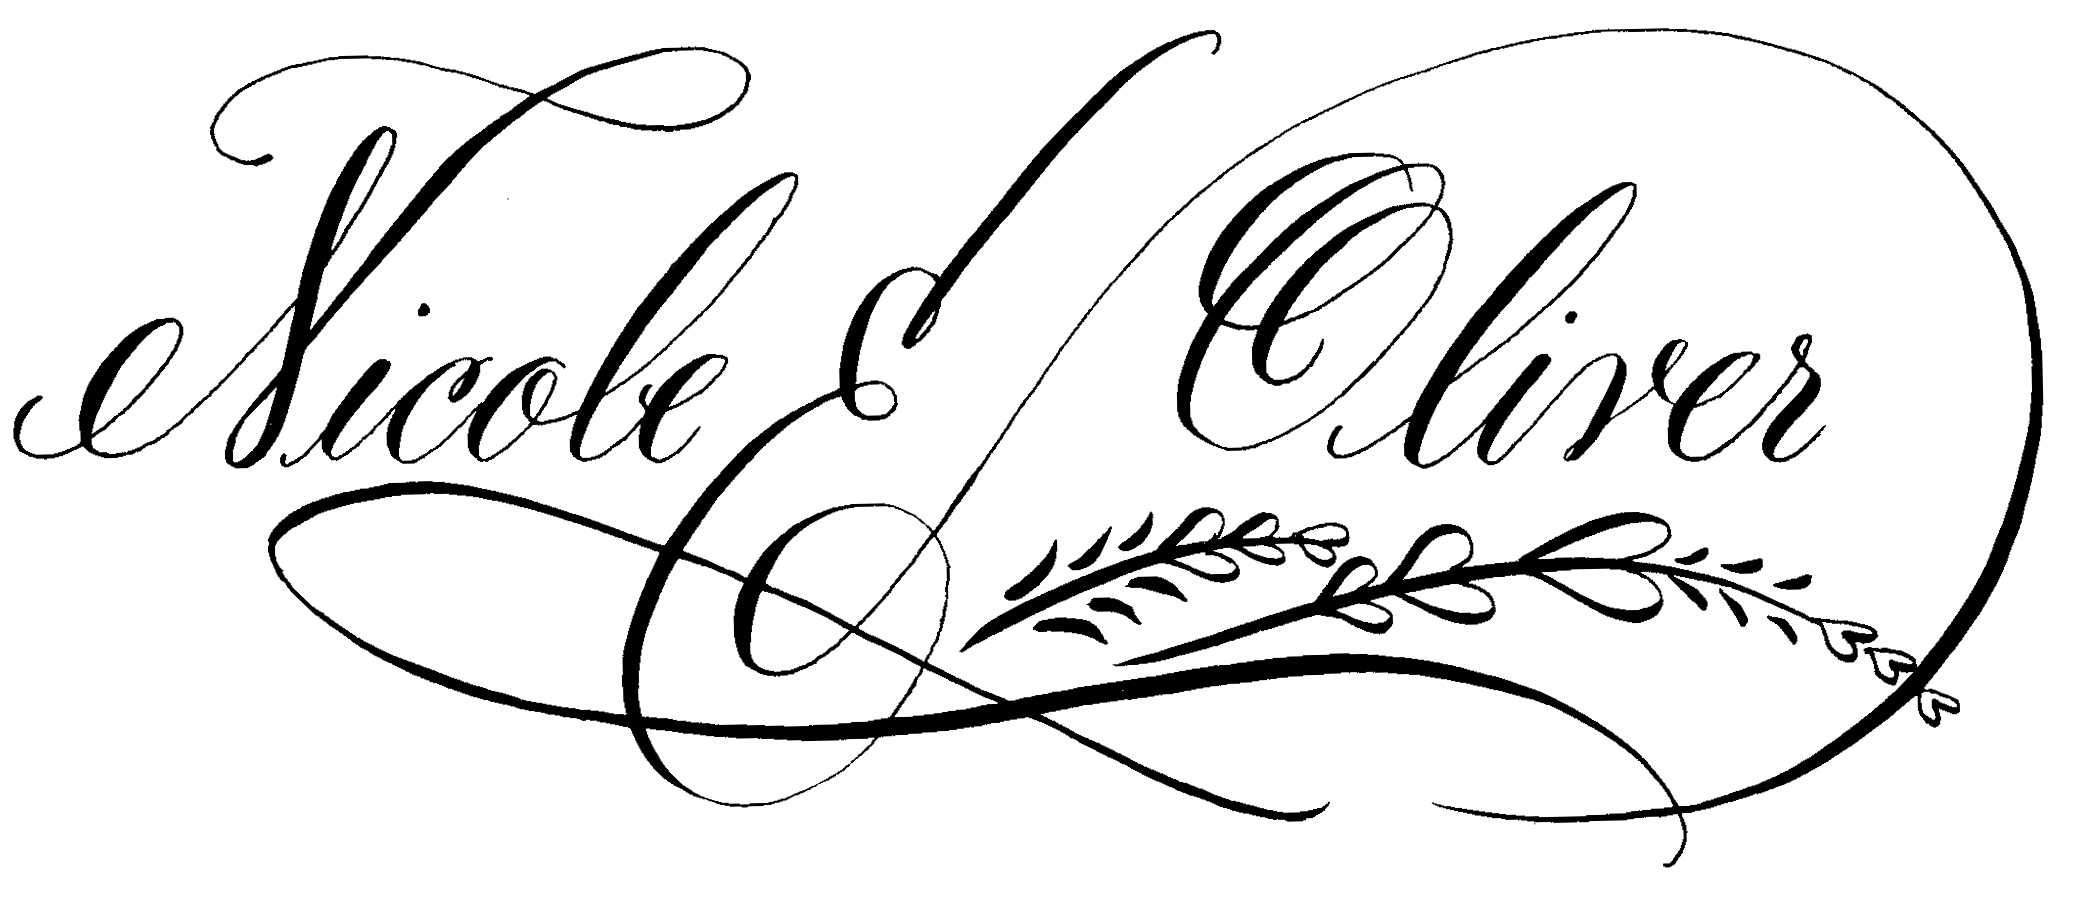 Lettering Art Studio Calligraphy Give away! | Lettering Art Studio